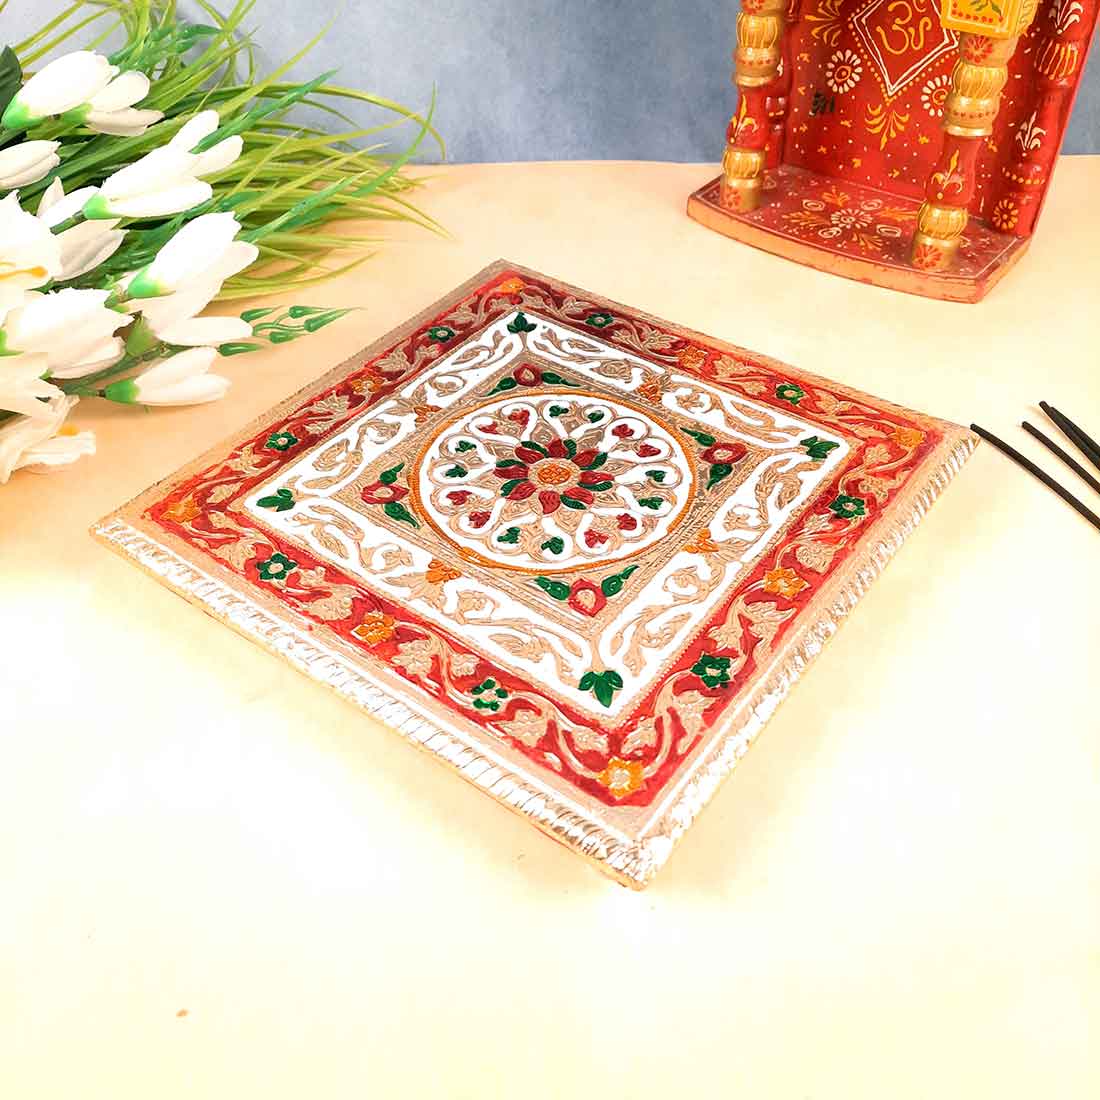 Pooja Chowki Bajot | Wooden Chowki Set - For Pooja, Festivals, Temple & Home Décor - 8, 10 Inch (Pack of 2) - Apkamart